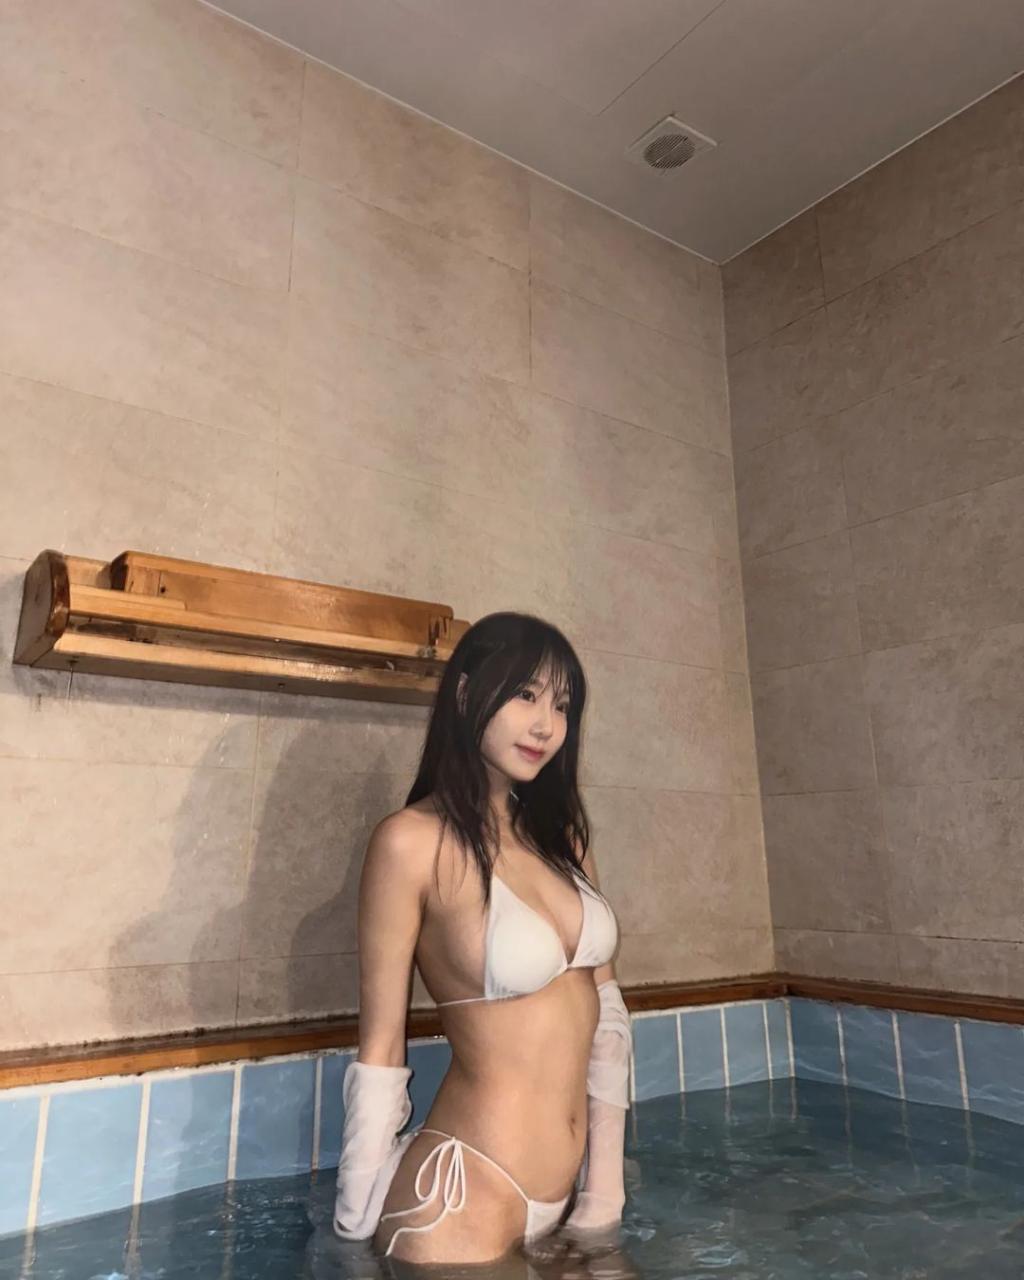 New training exercise bodystagram wearing white string bikini in the bath